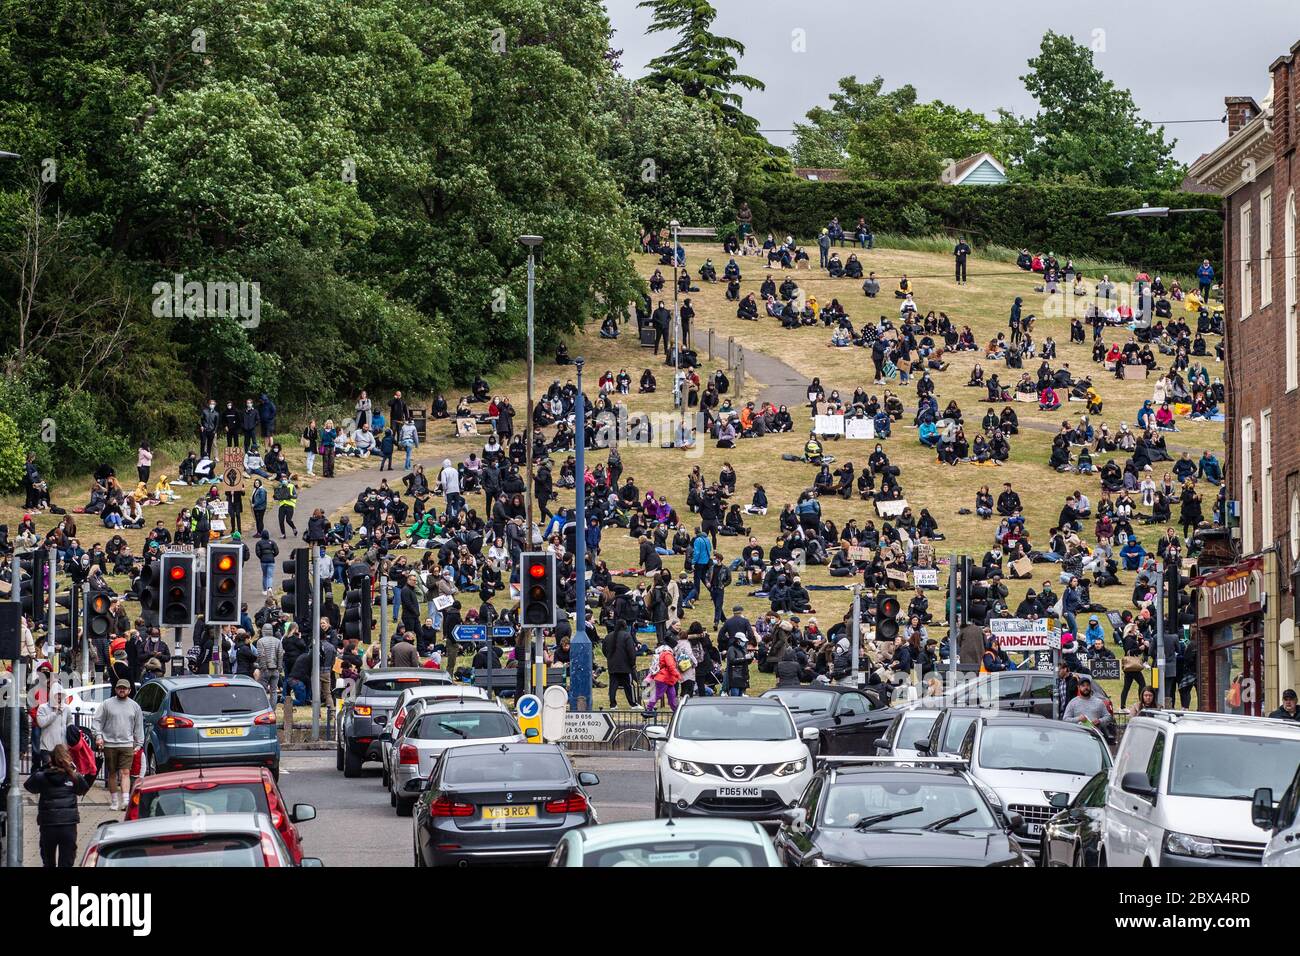 Manifestantes y manifestantes se reúnen para BLM, Black Lives Matter protest y se reúnen en una colina en Hitchin, Hertfordshire, Reino Unido Foto de stock